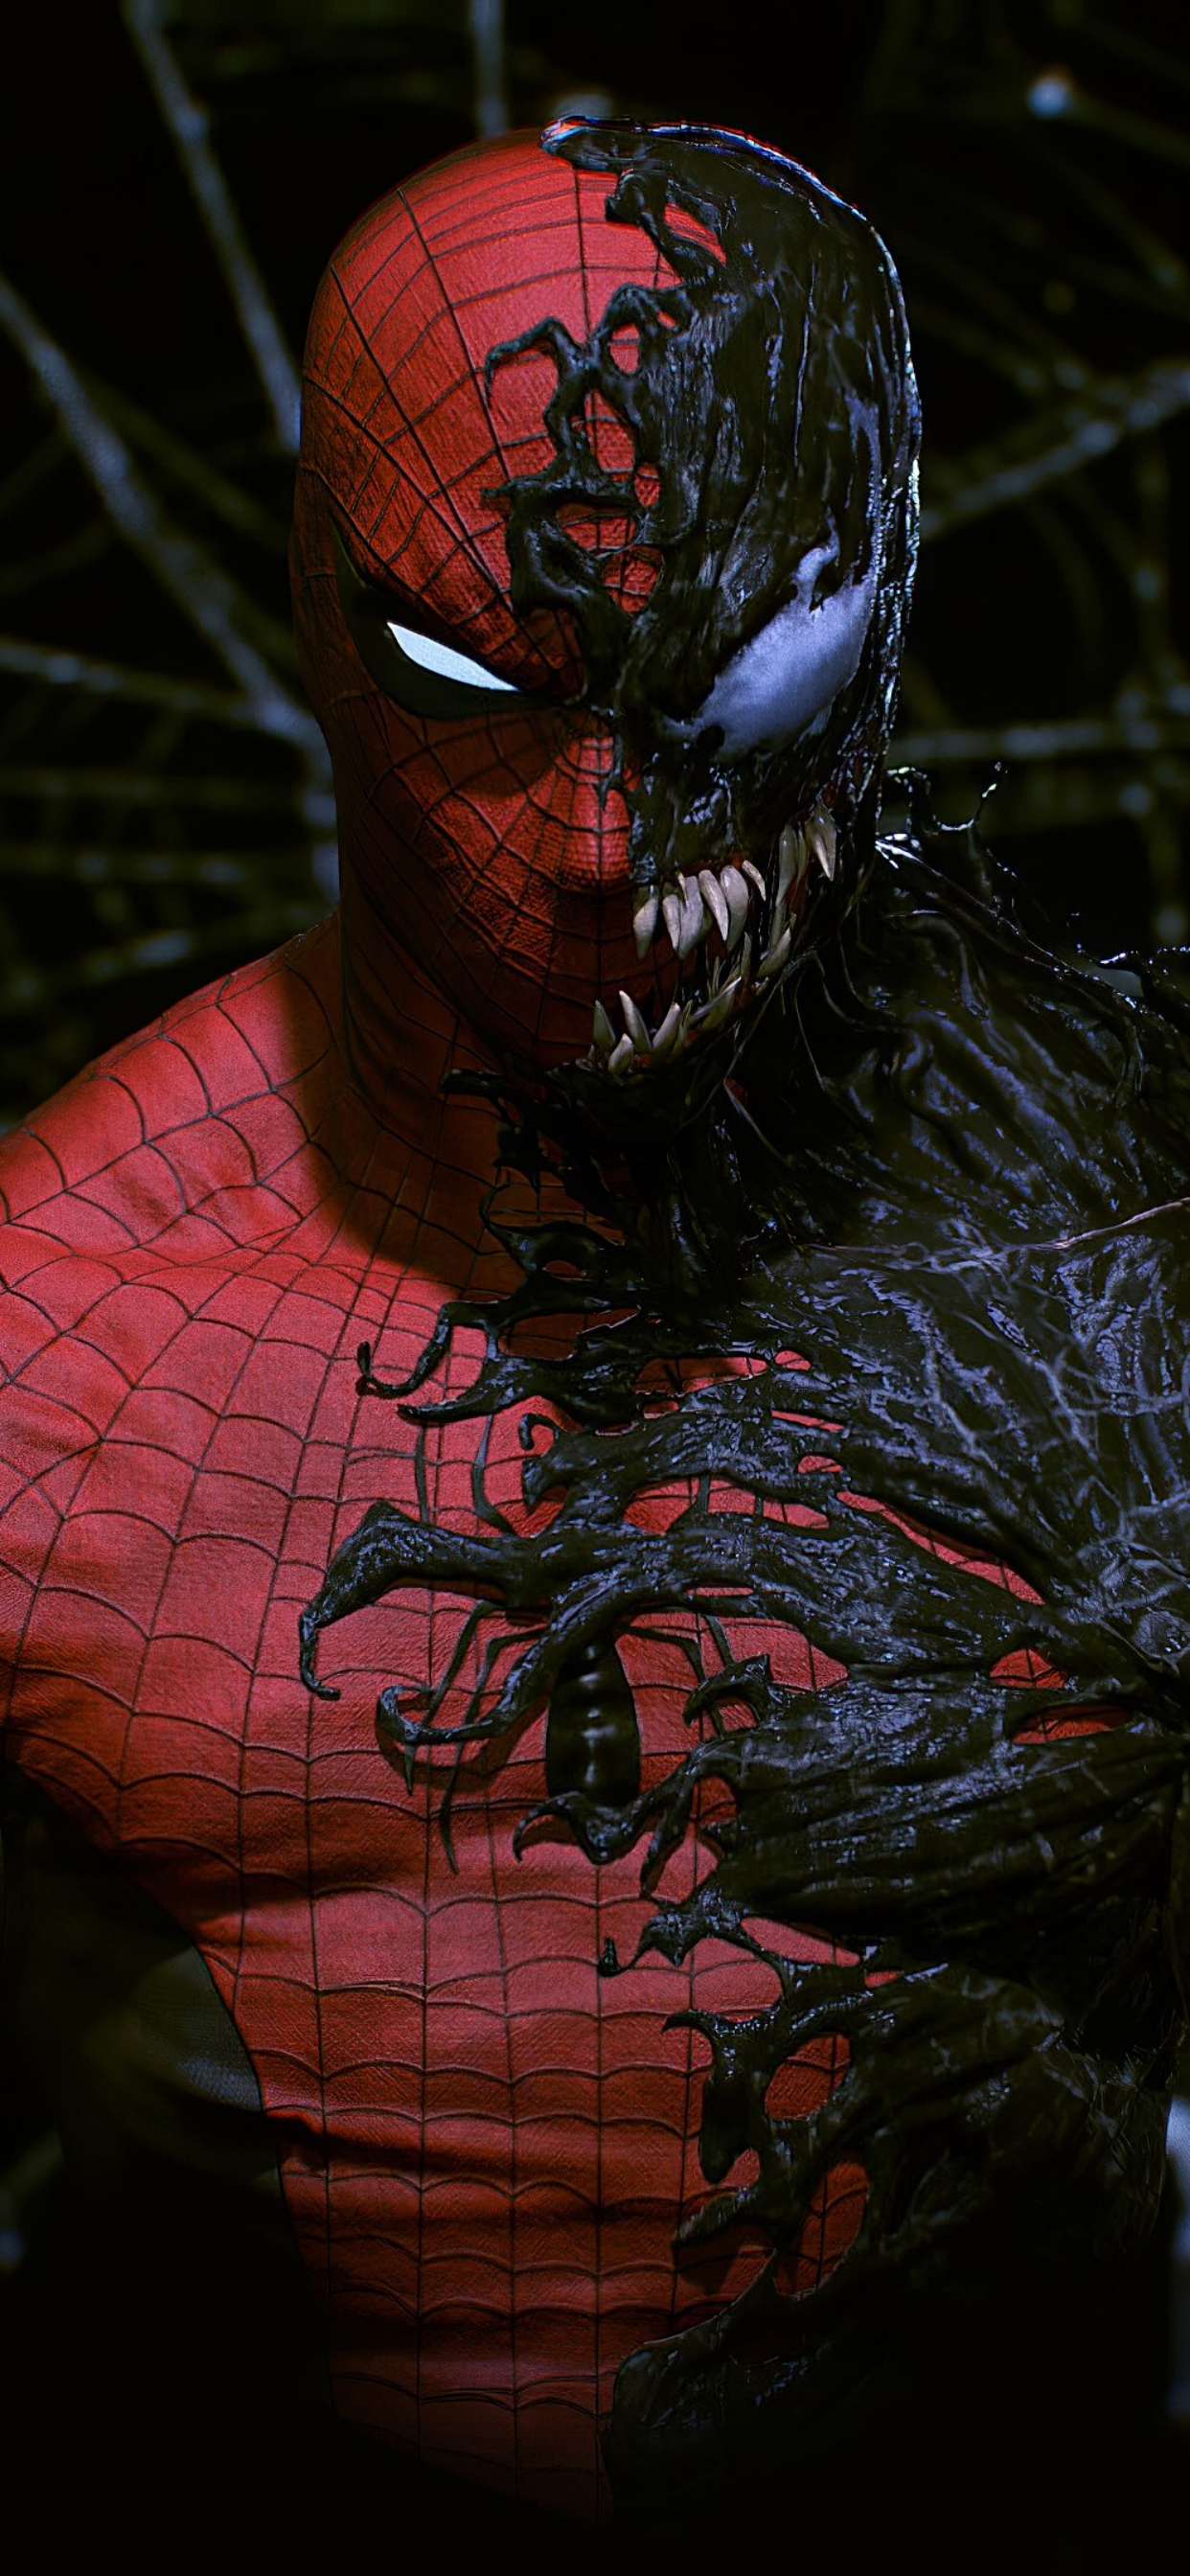 Iphone wallpaper - Spider-man vs Venom